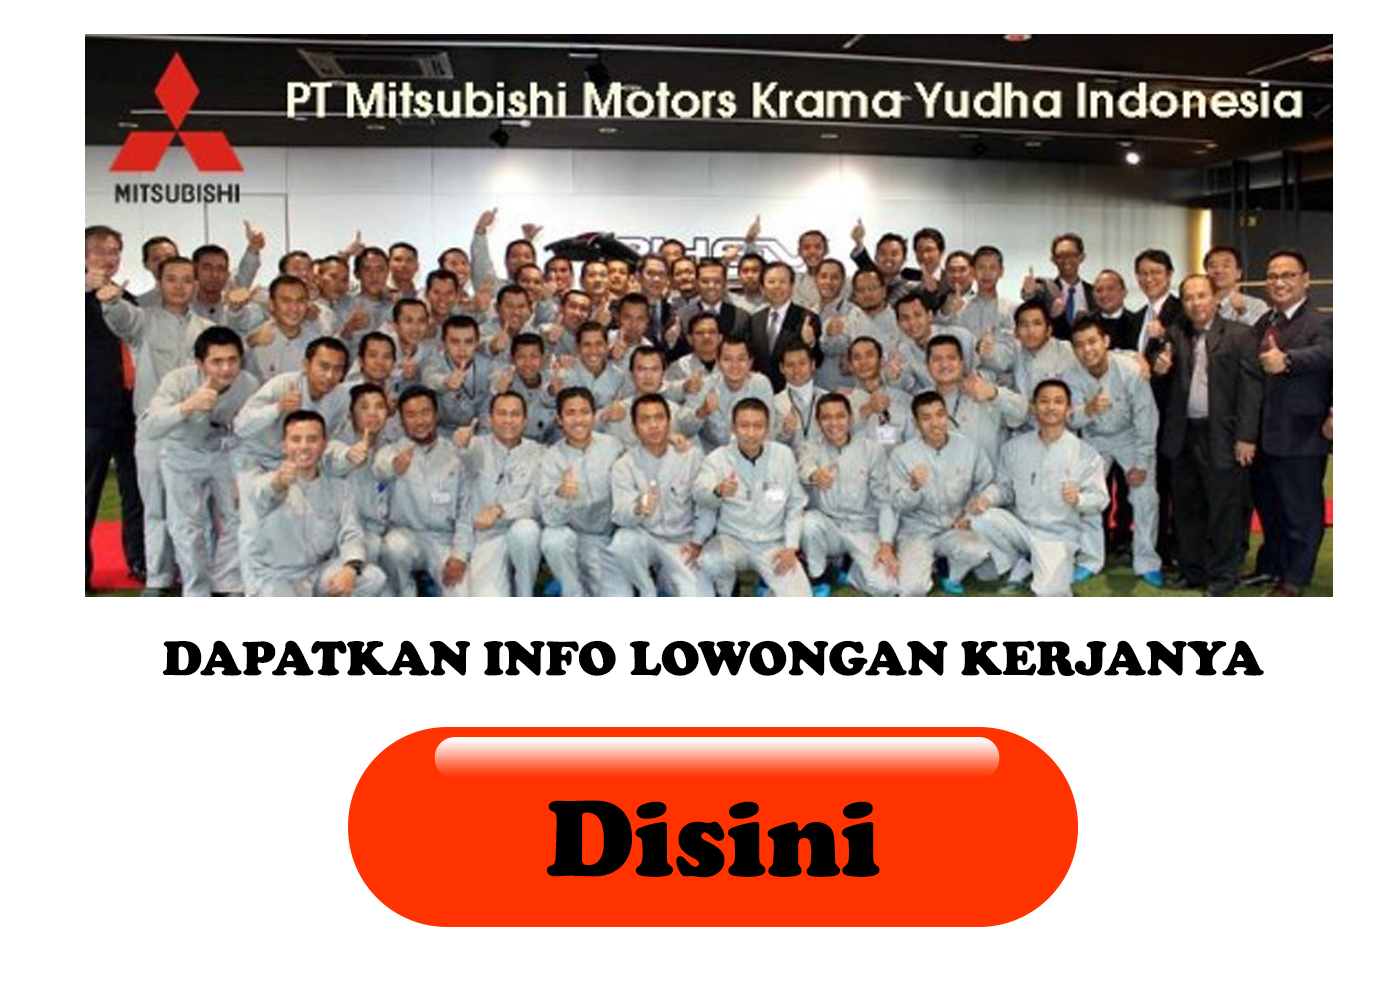 Gaji & Lowongan PT Mitsubishi Krama Yudha Motors & Mfg